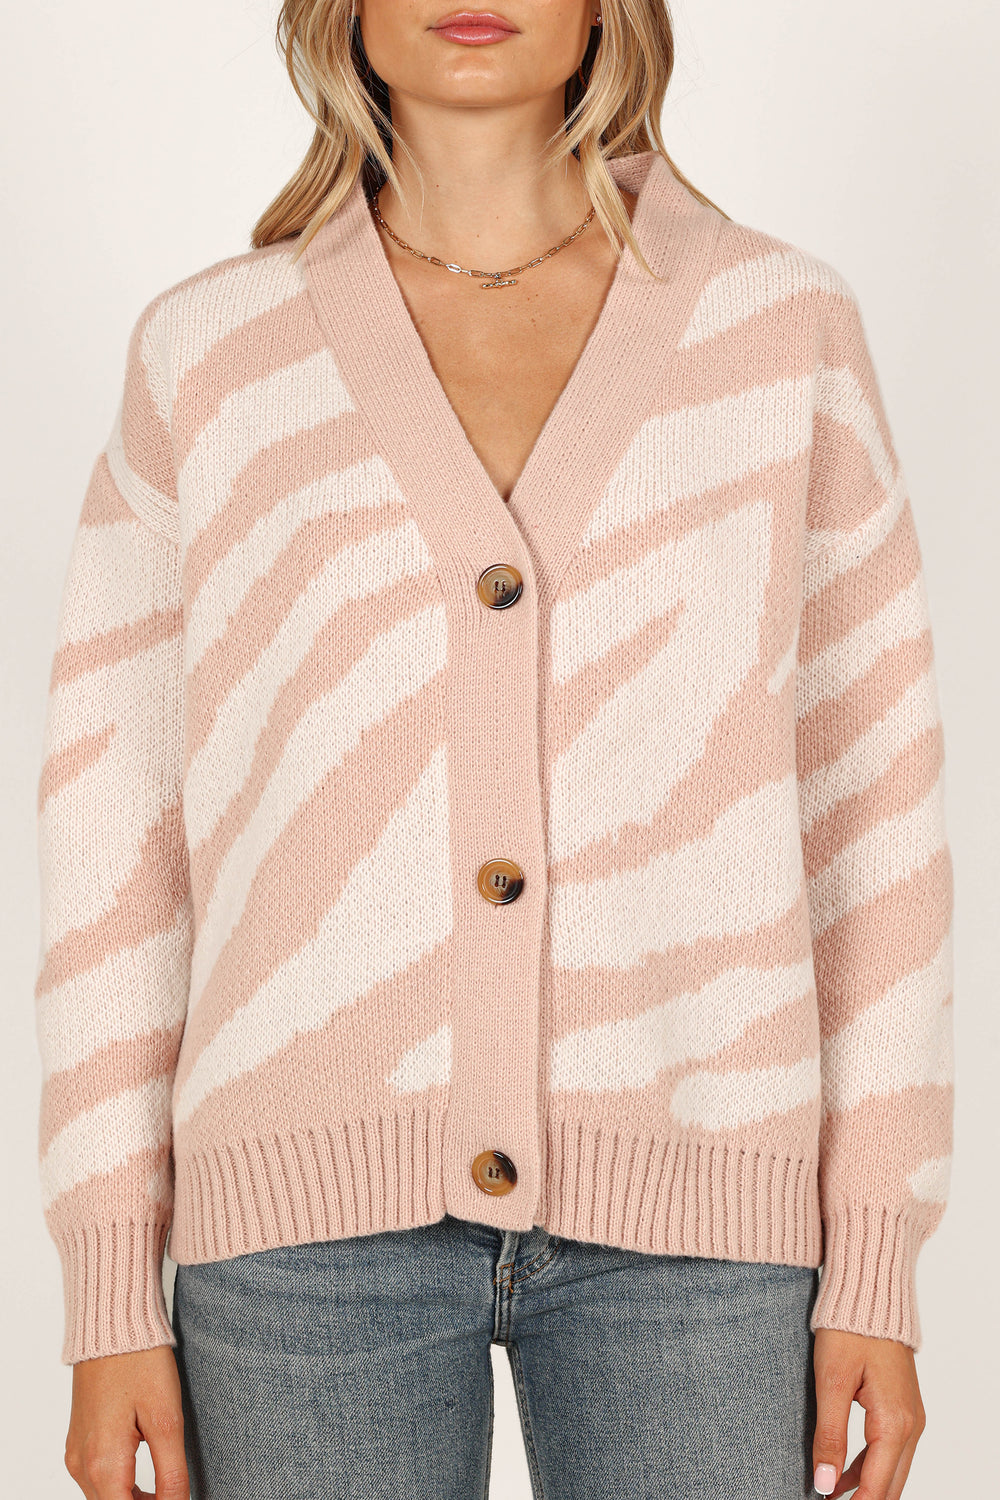 Knitwear @Zebra Print Button Front Cardigan - Multi